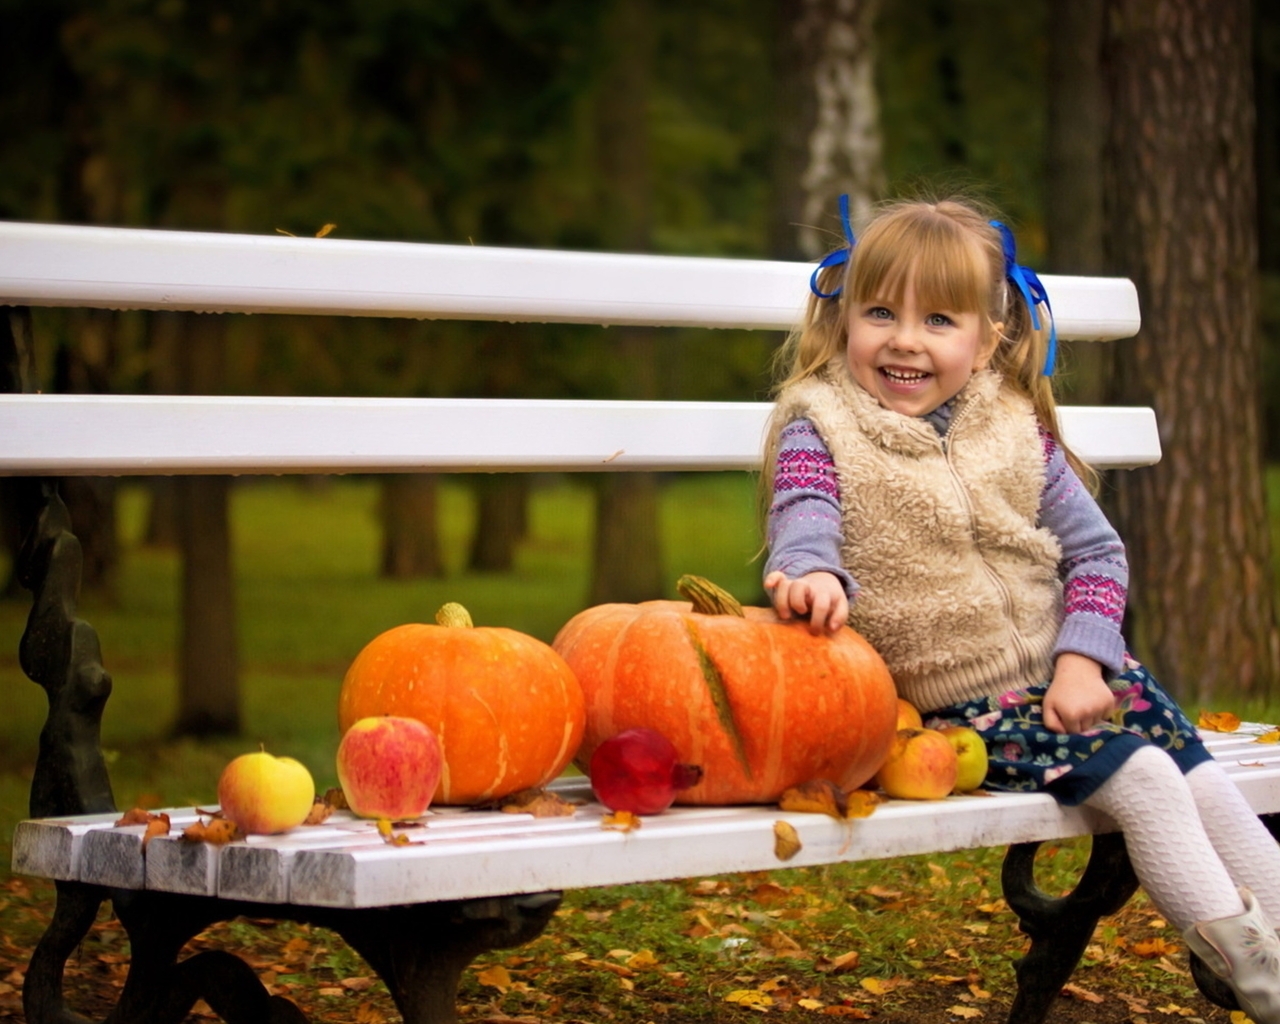 Image: Girl, smile, bench, pumpkins, park, autumn